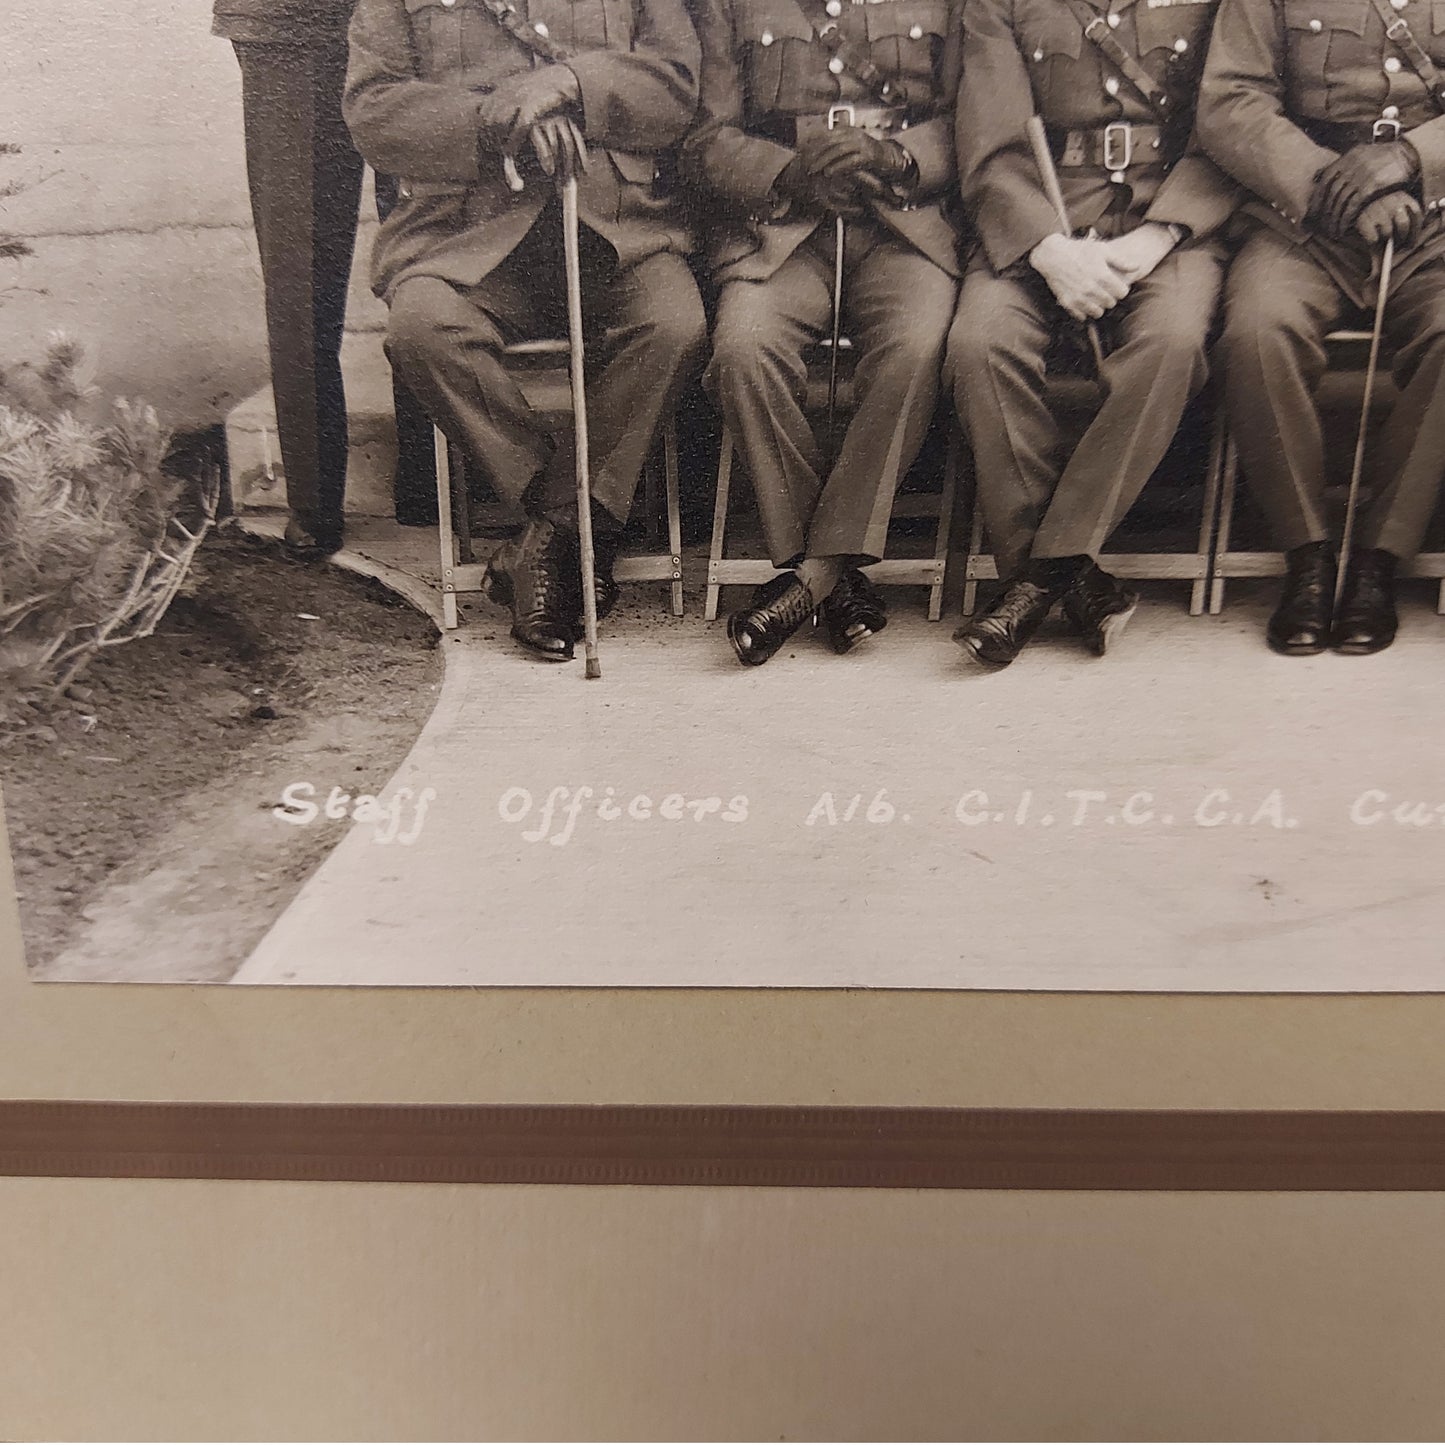 WW2 Staff Officers CITC Currie Barracks Calgary 1943